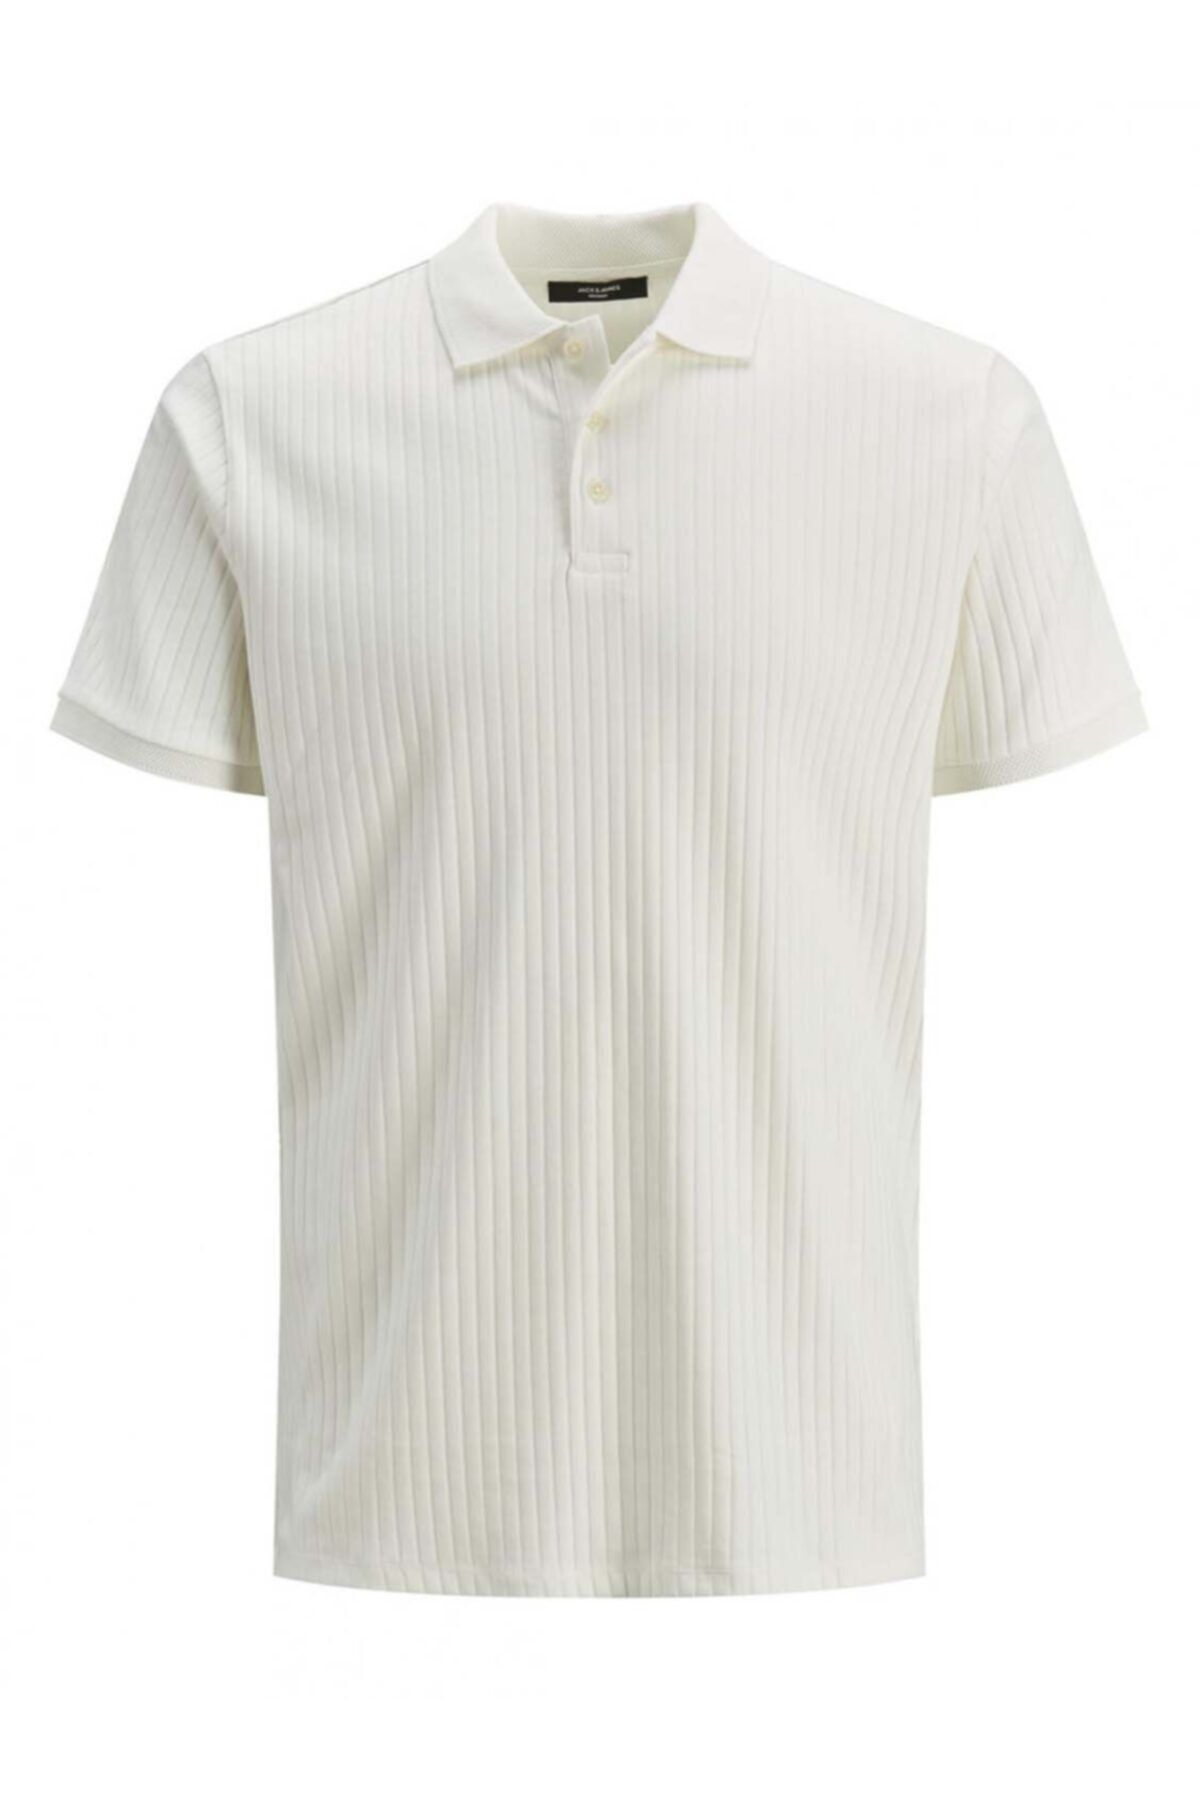 Jack & Jones Erkek Beyaz  Polo Yaka T-shirt